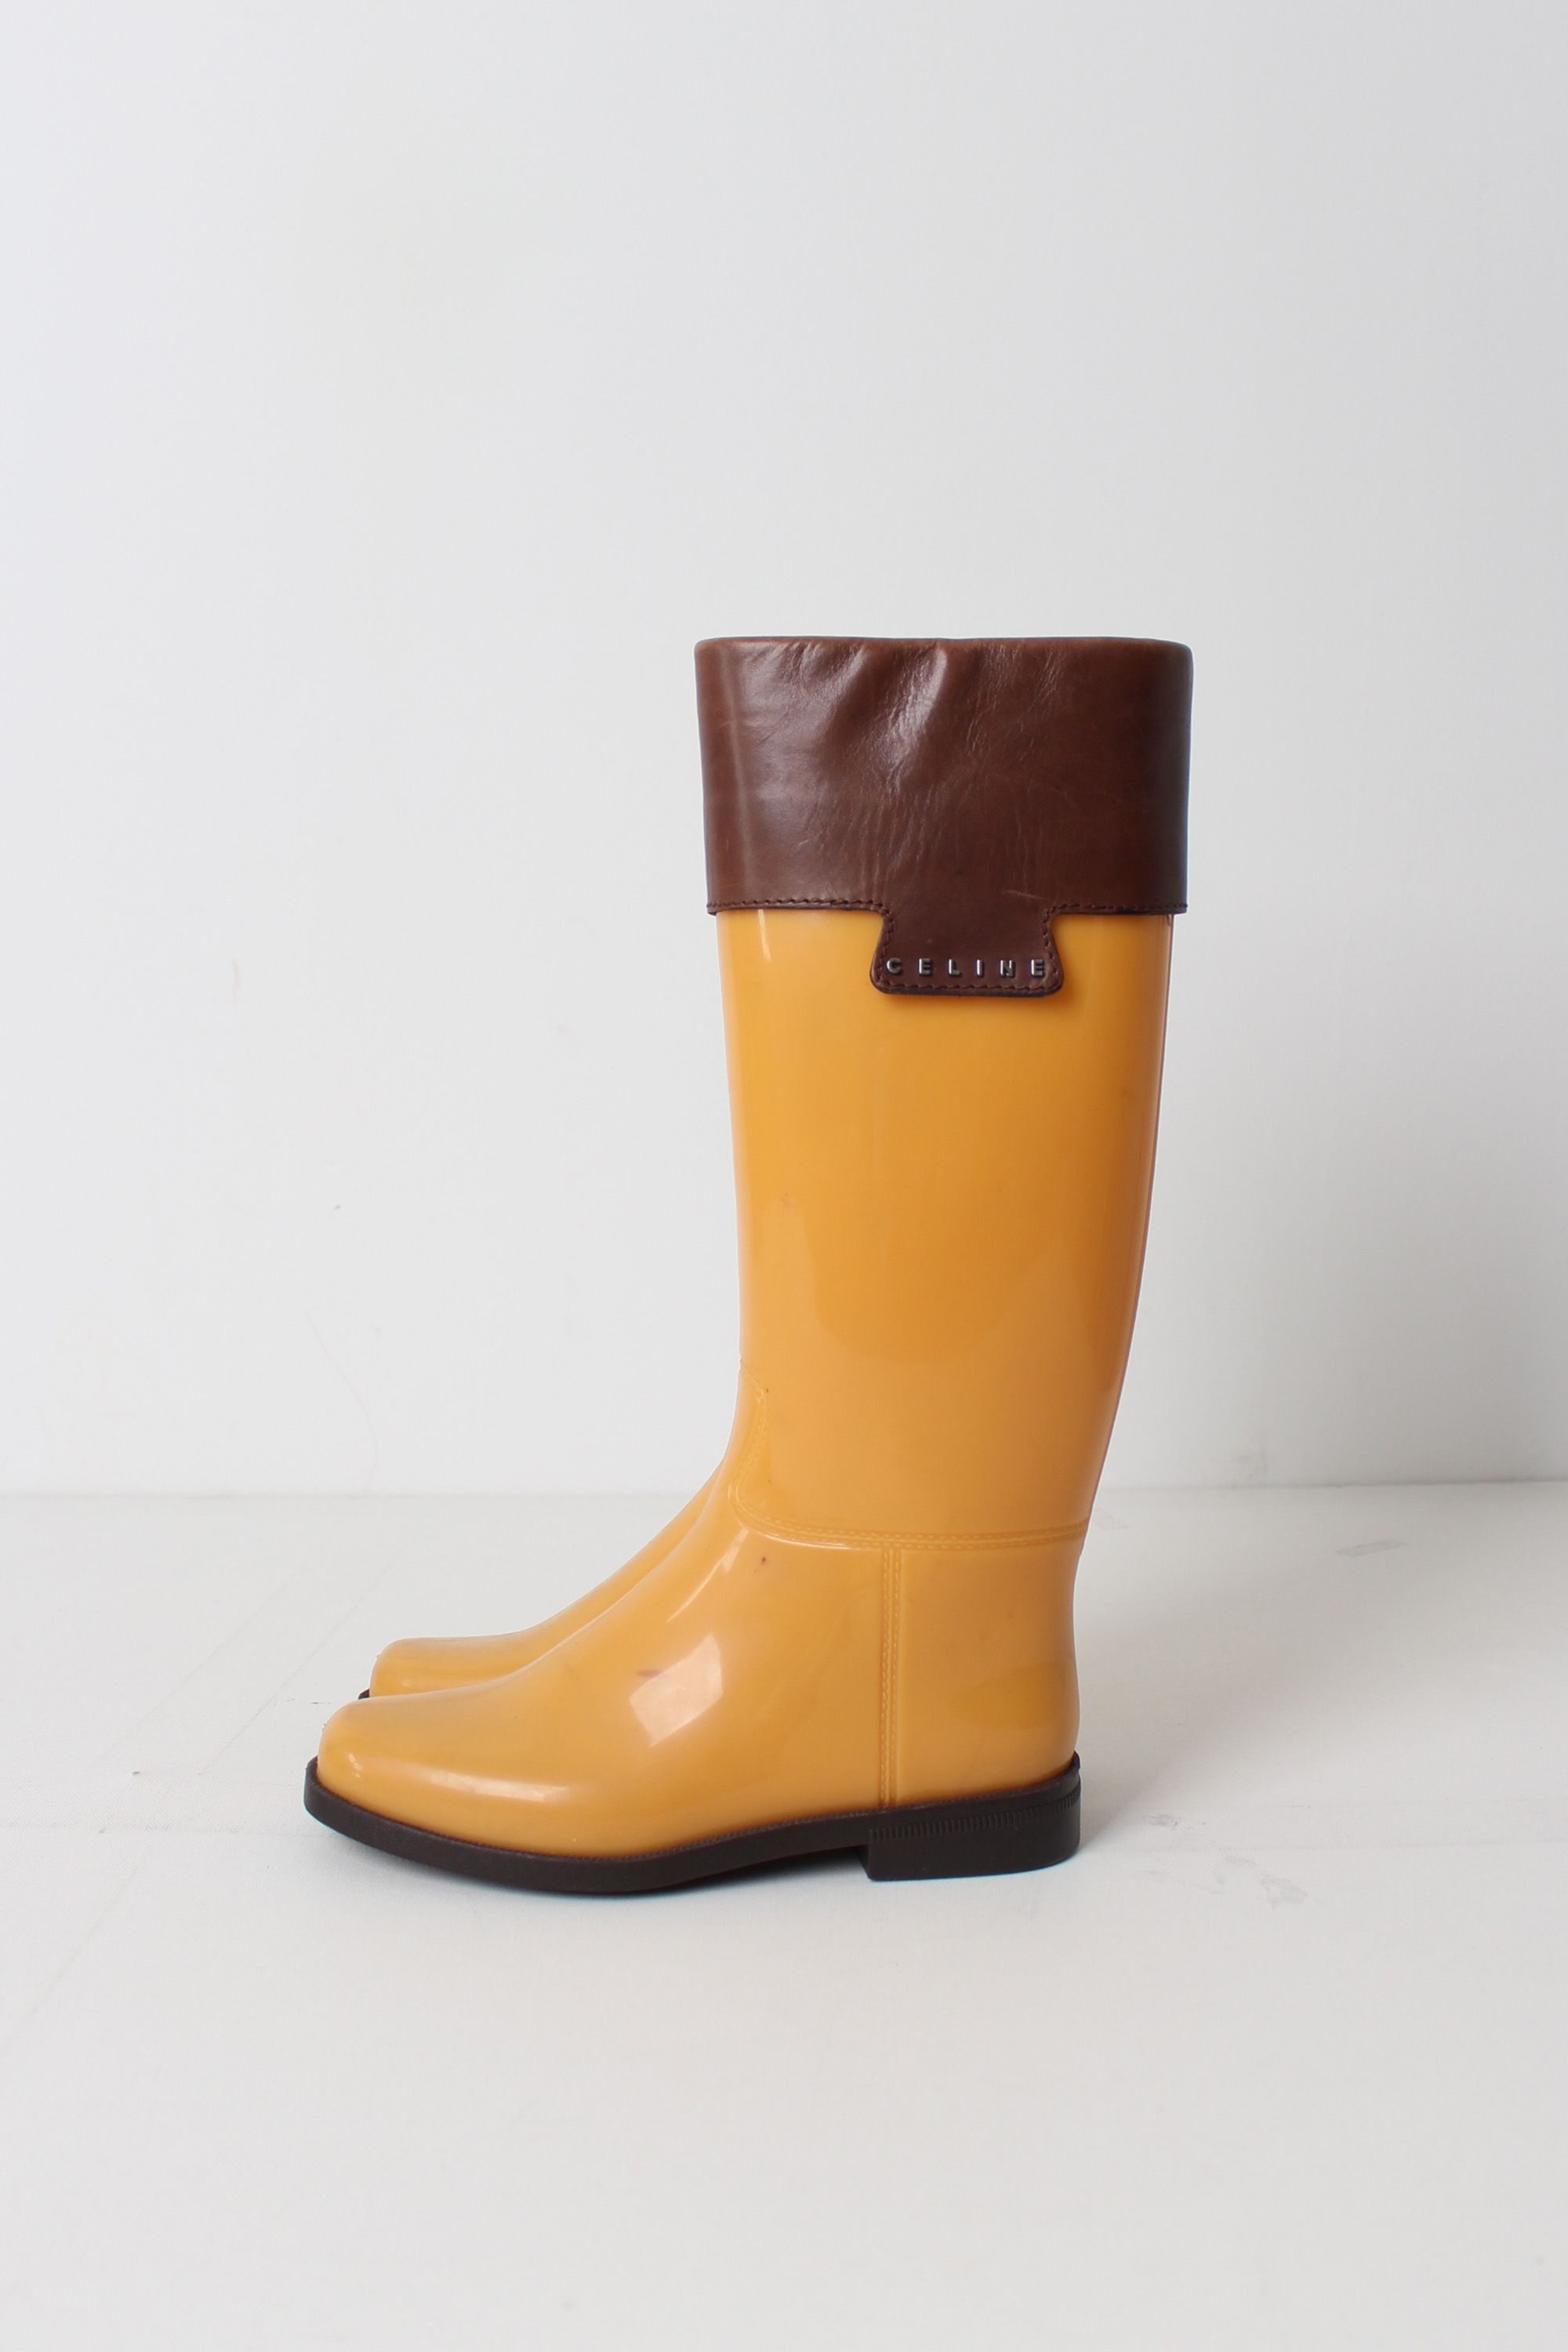 CELINE rain boots